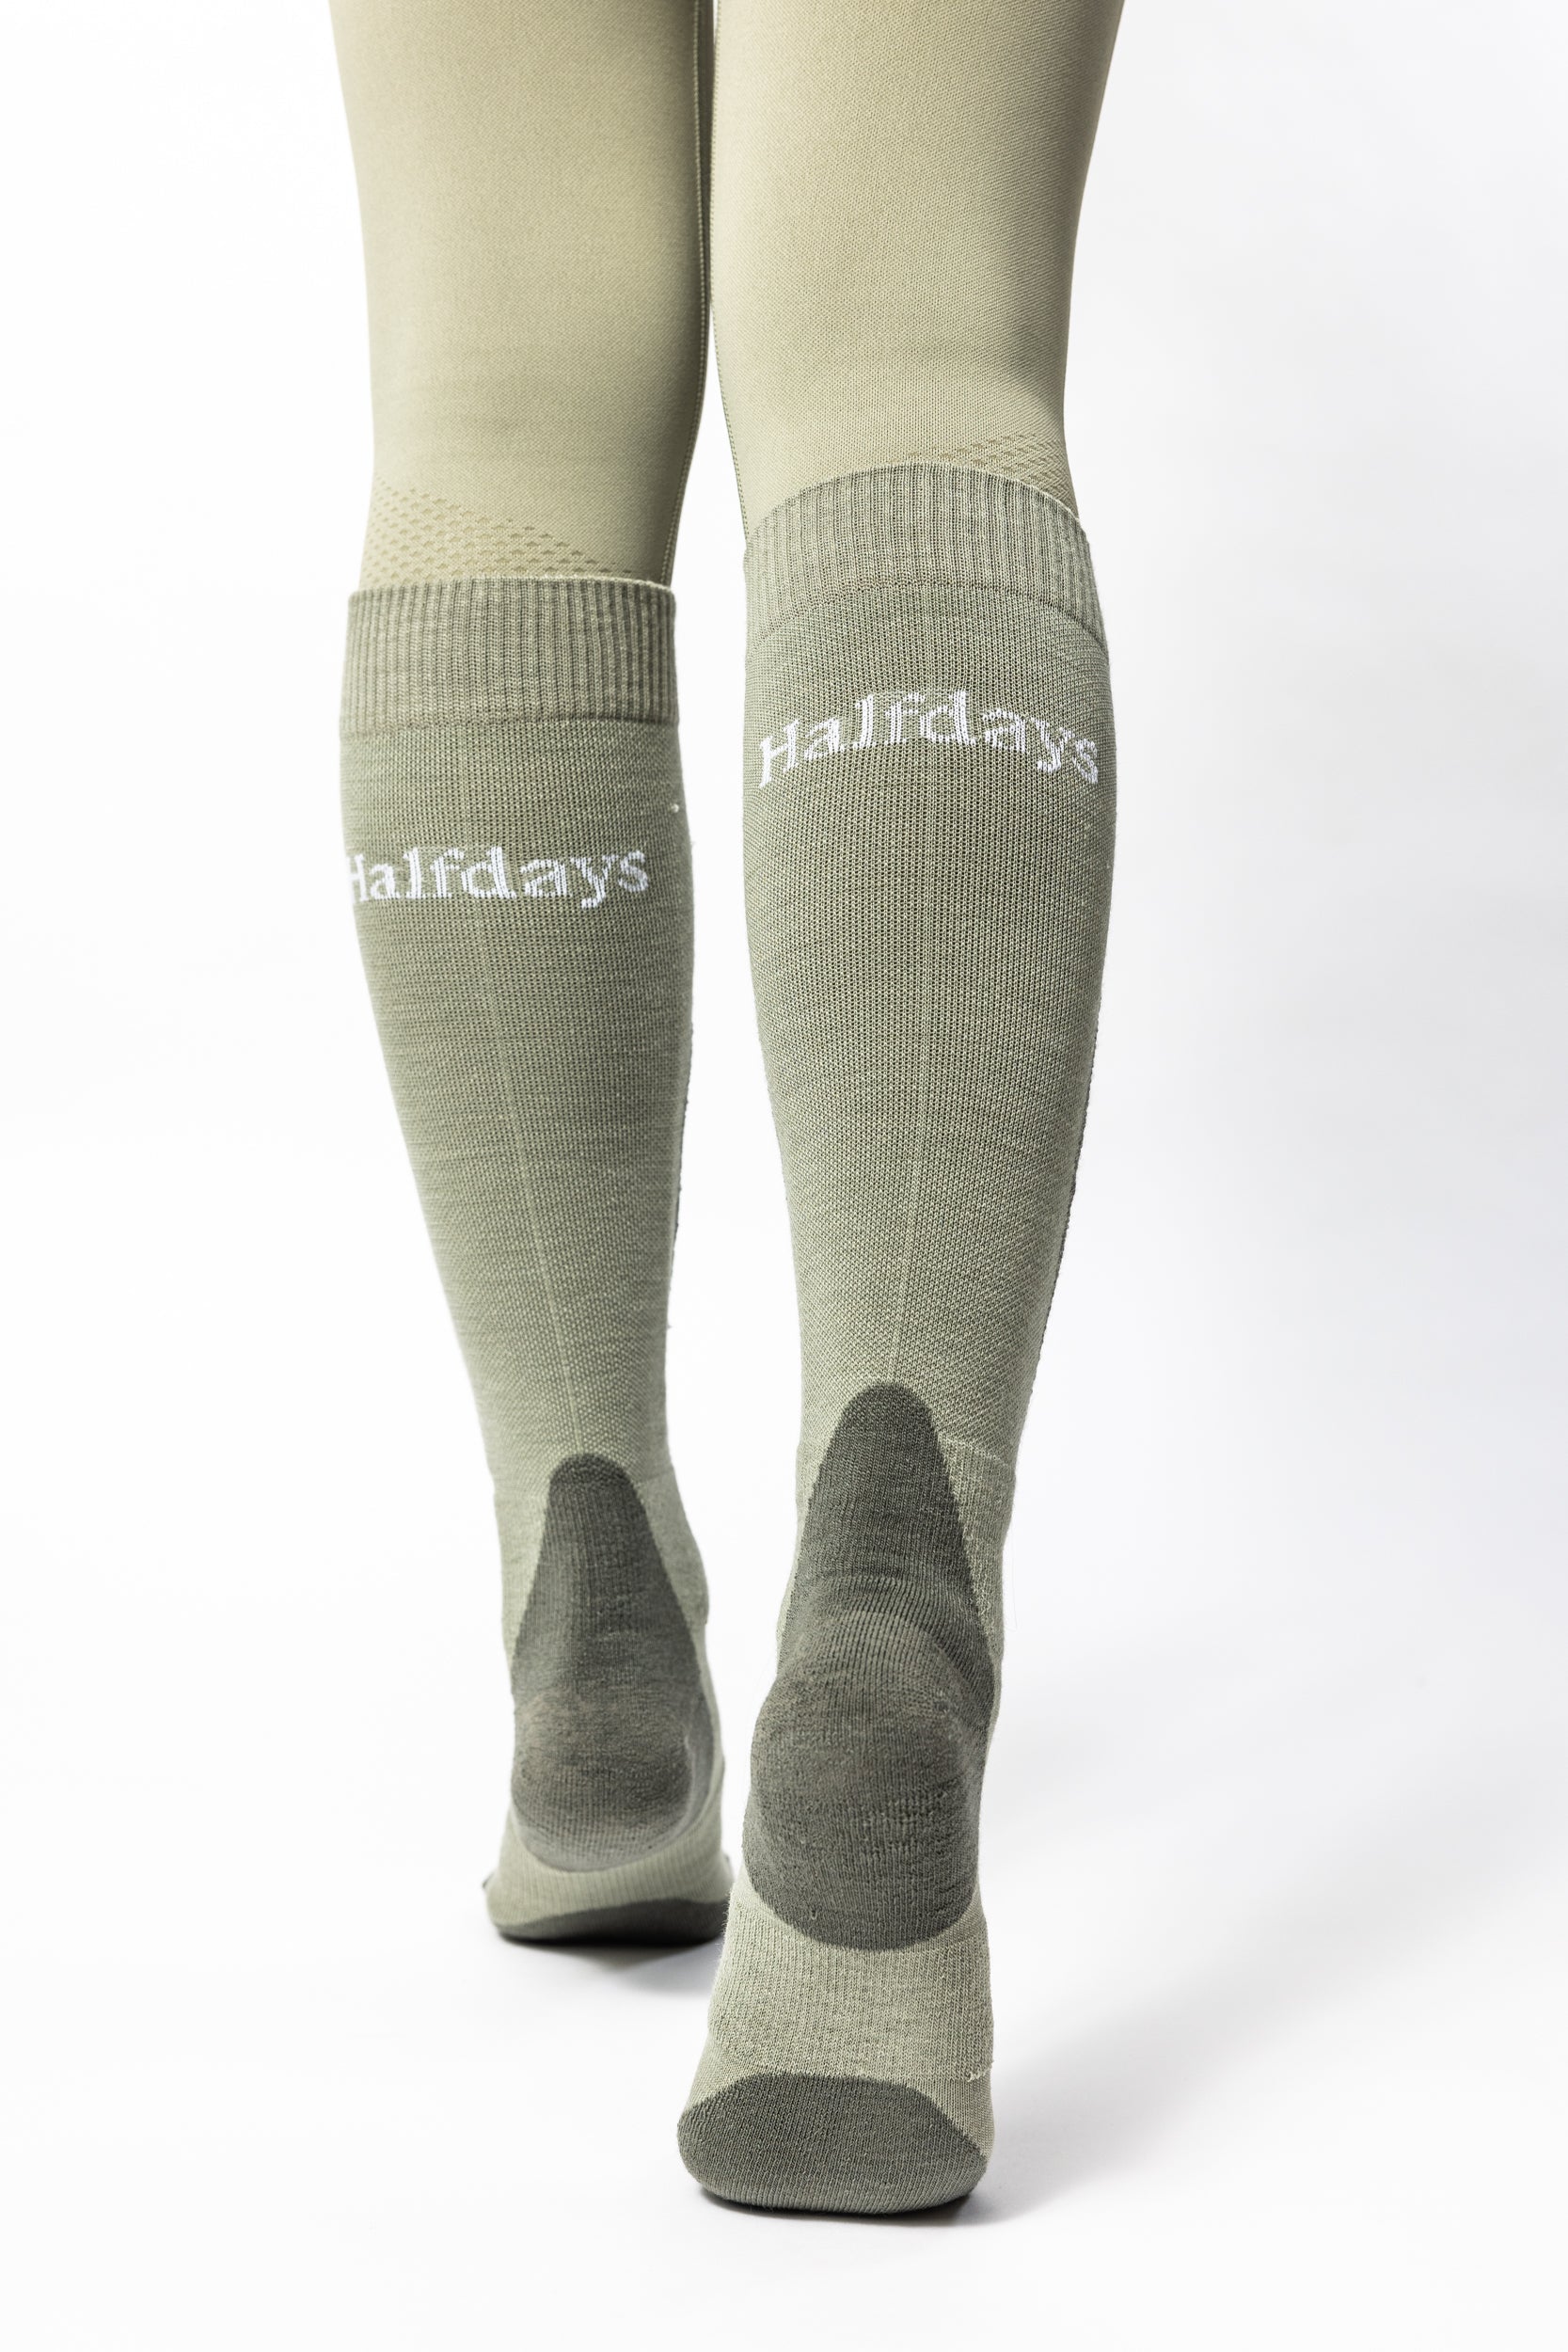 Halfdays Ski Club Socks